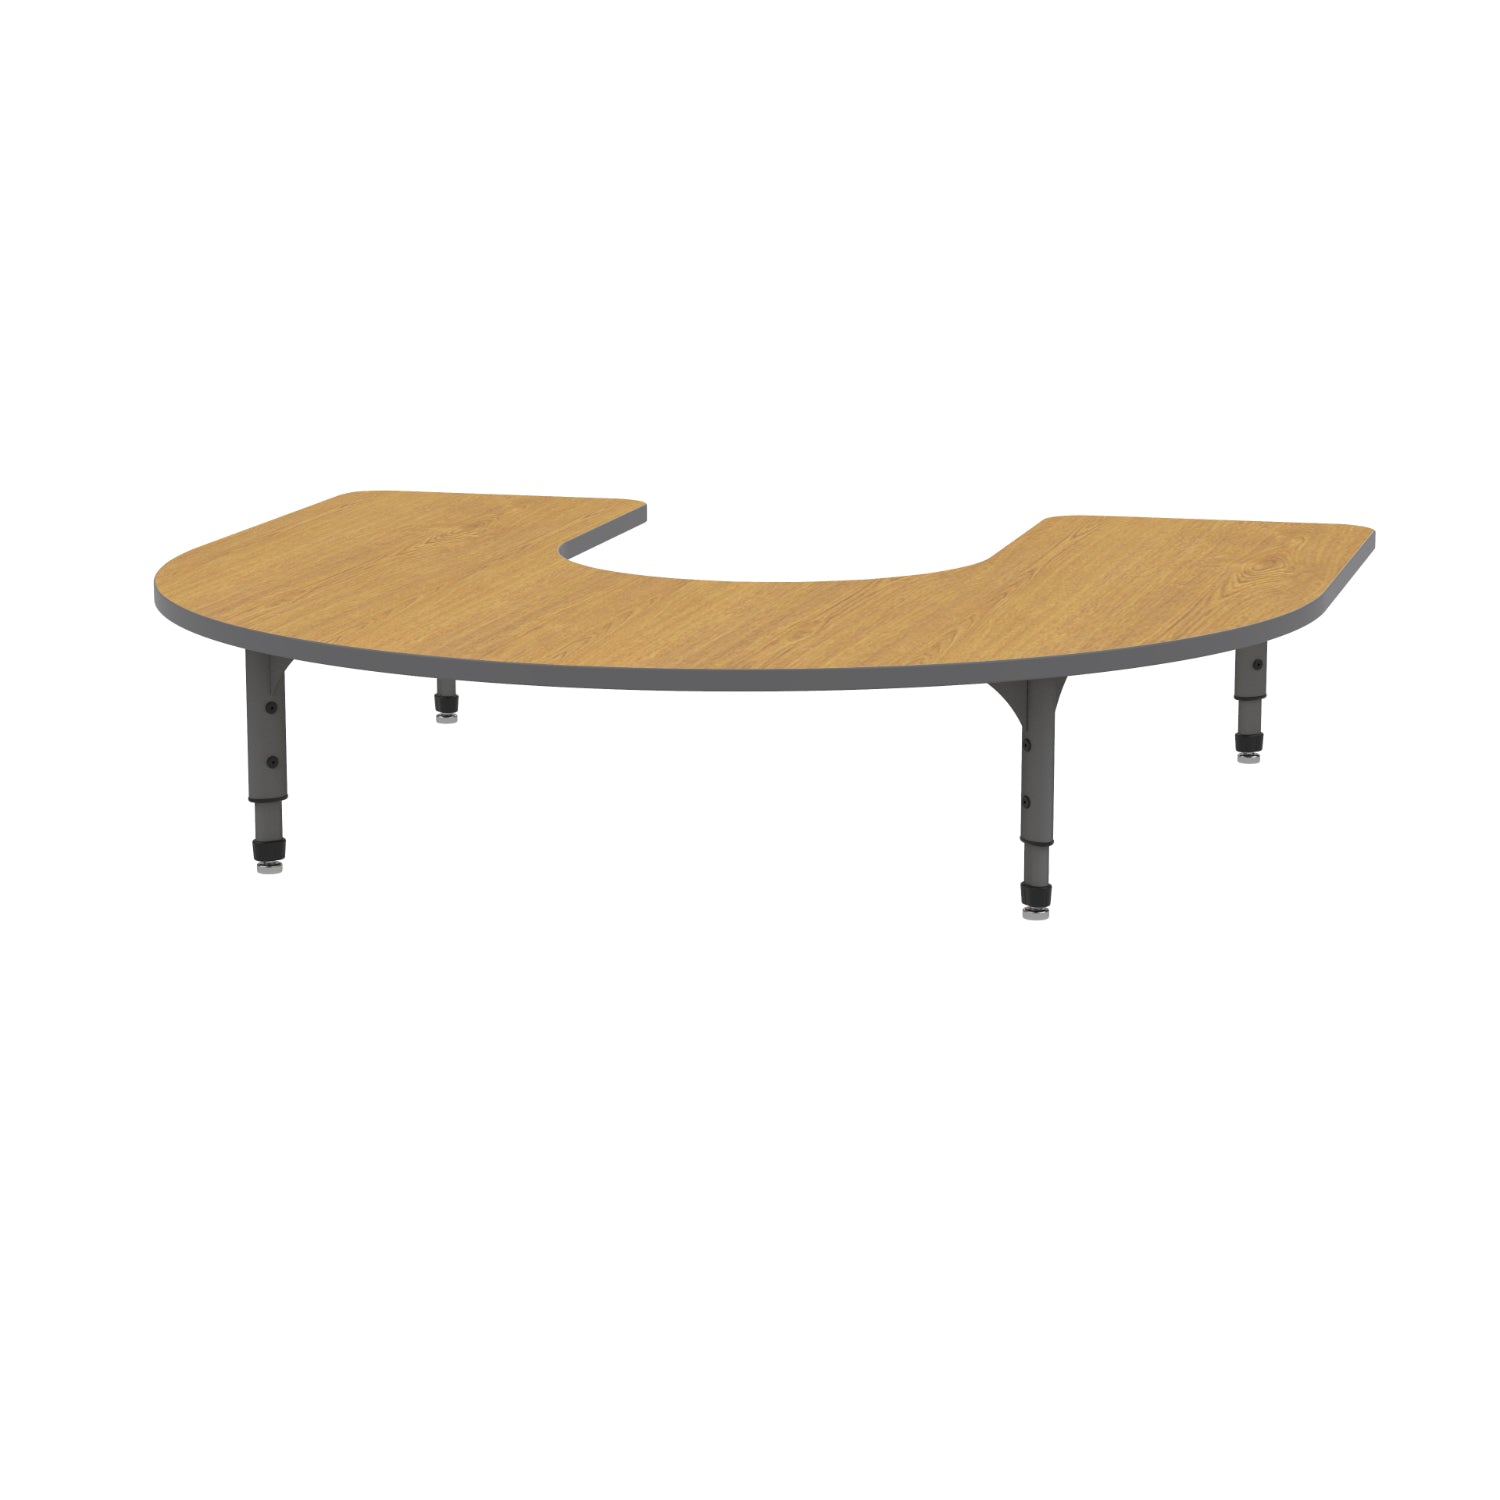 Adjustable Height Floor Activity Table, 60" x 66" Horseshoe